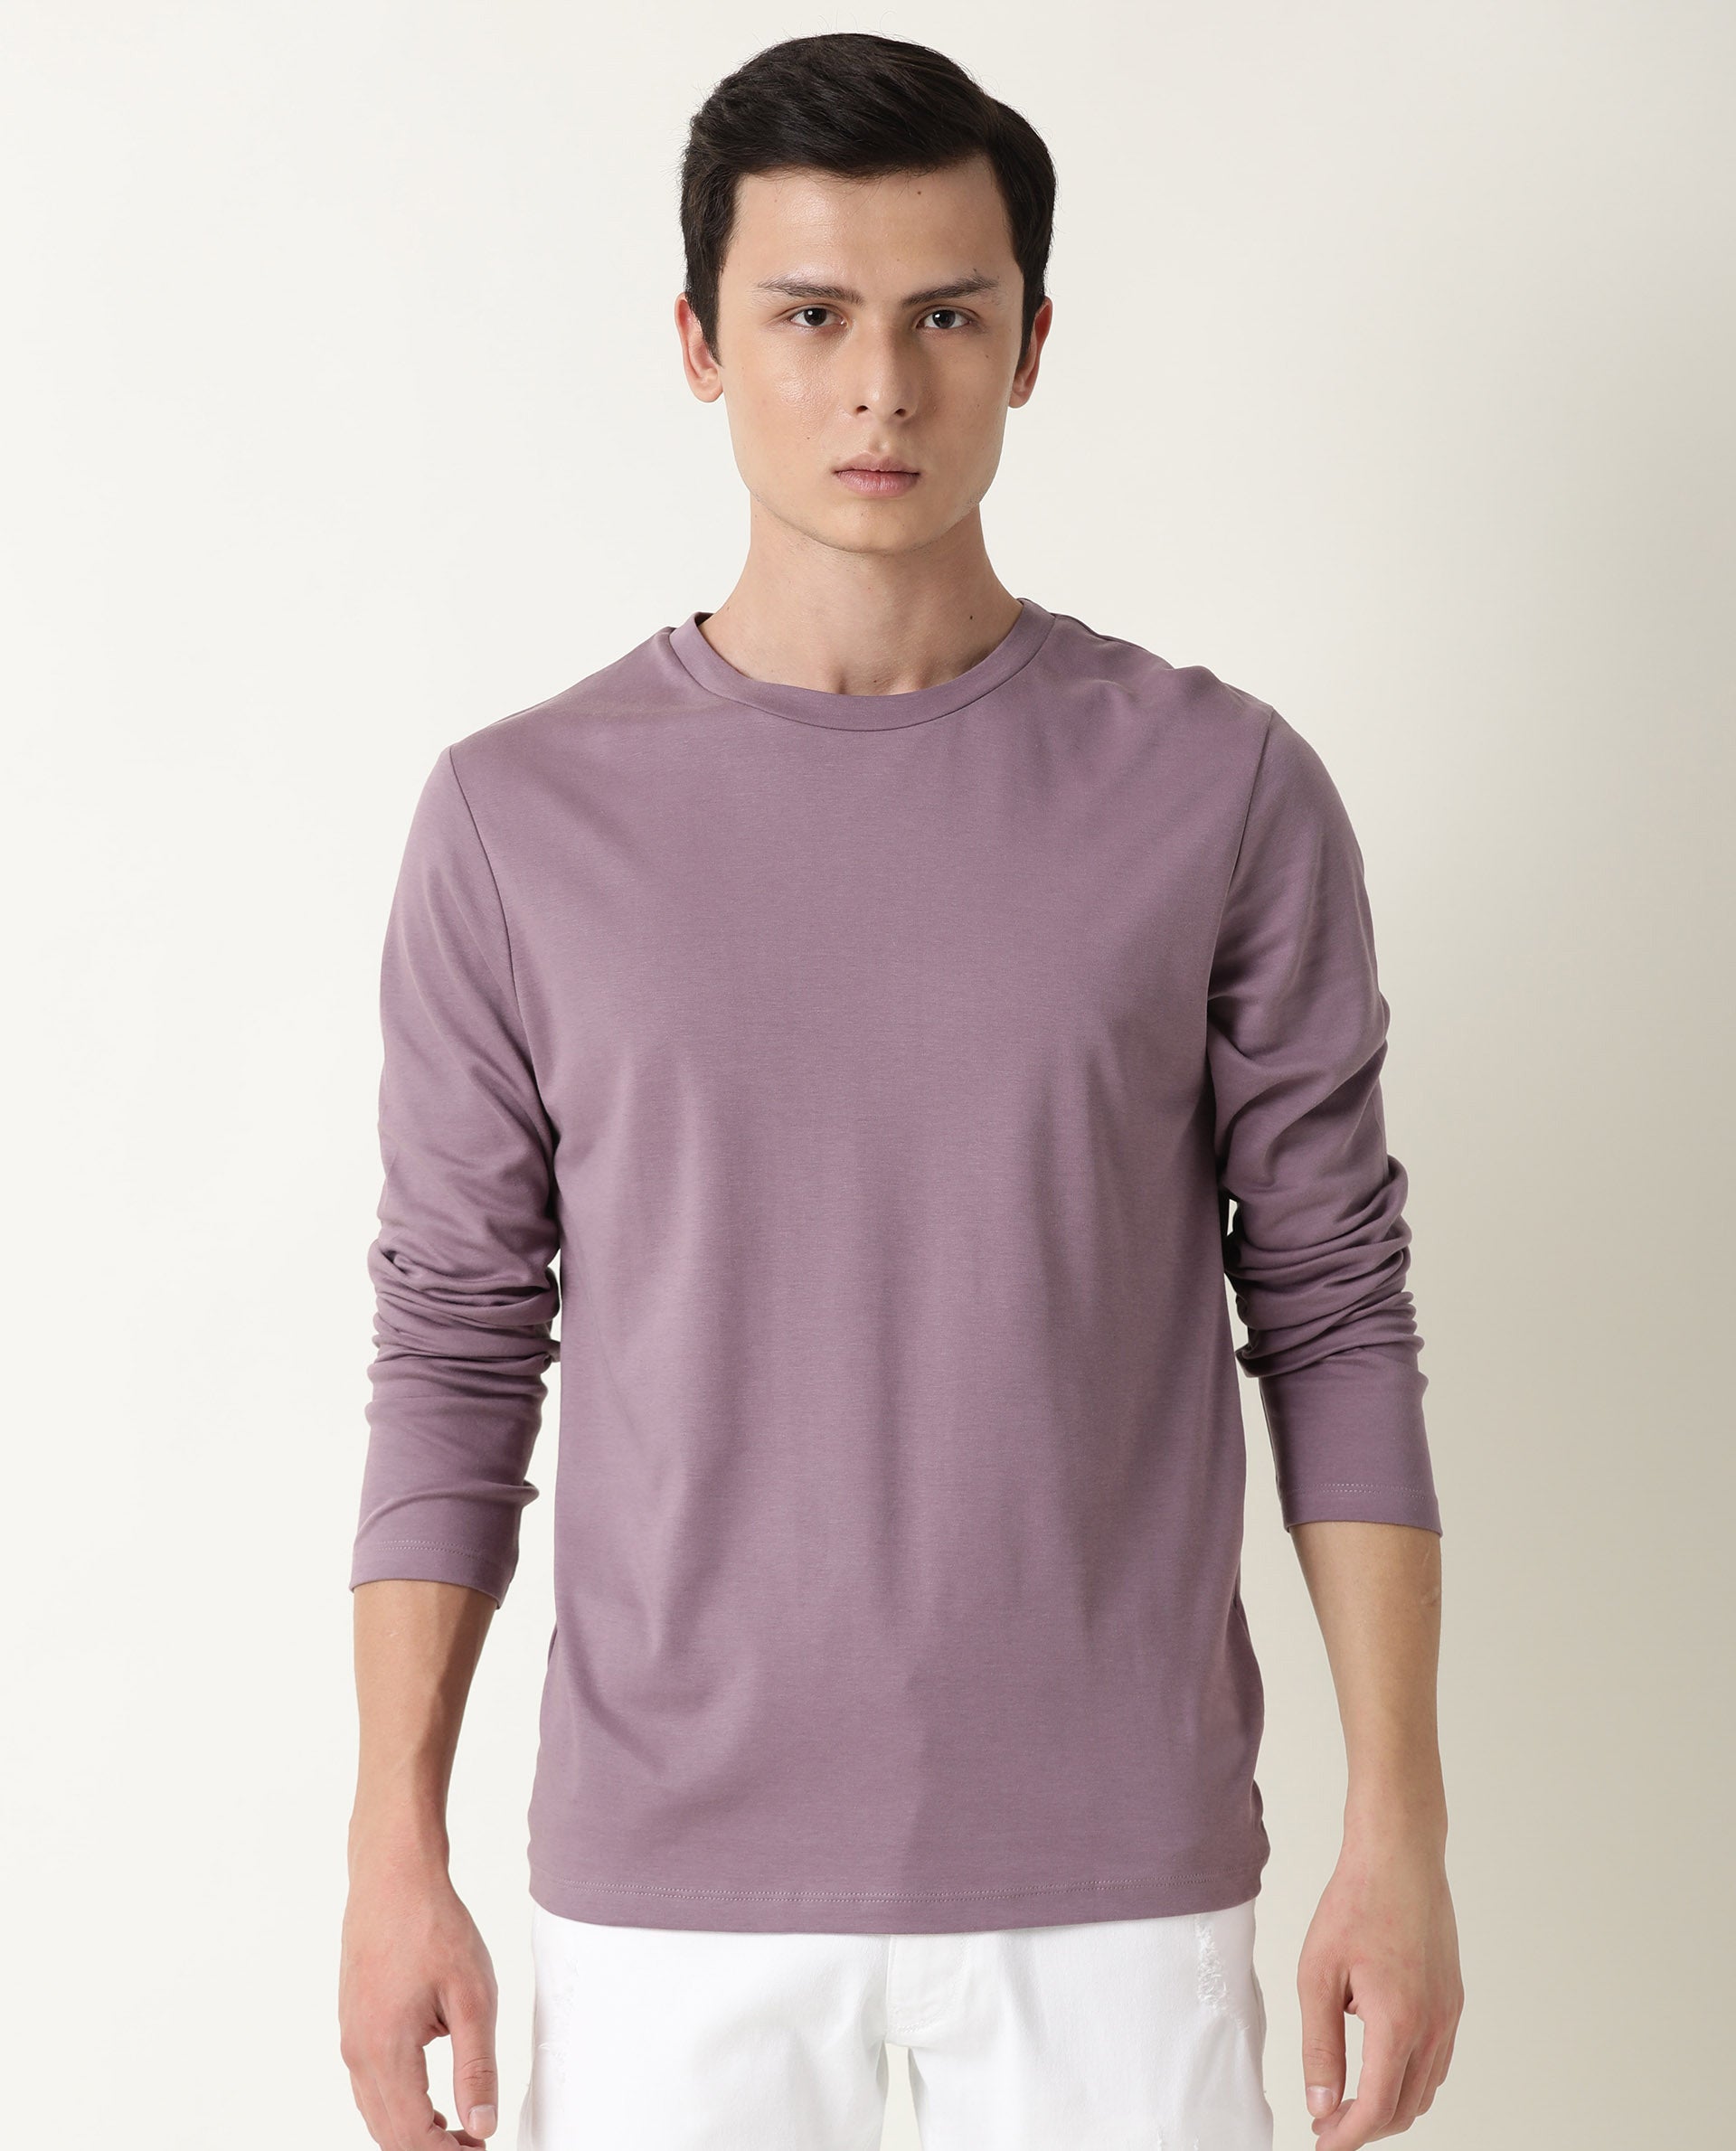 Men's Full Purple T-shirt Cotton Lycra Fabric Crew Neck Slim Fit - T-SHIRT LOVER